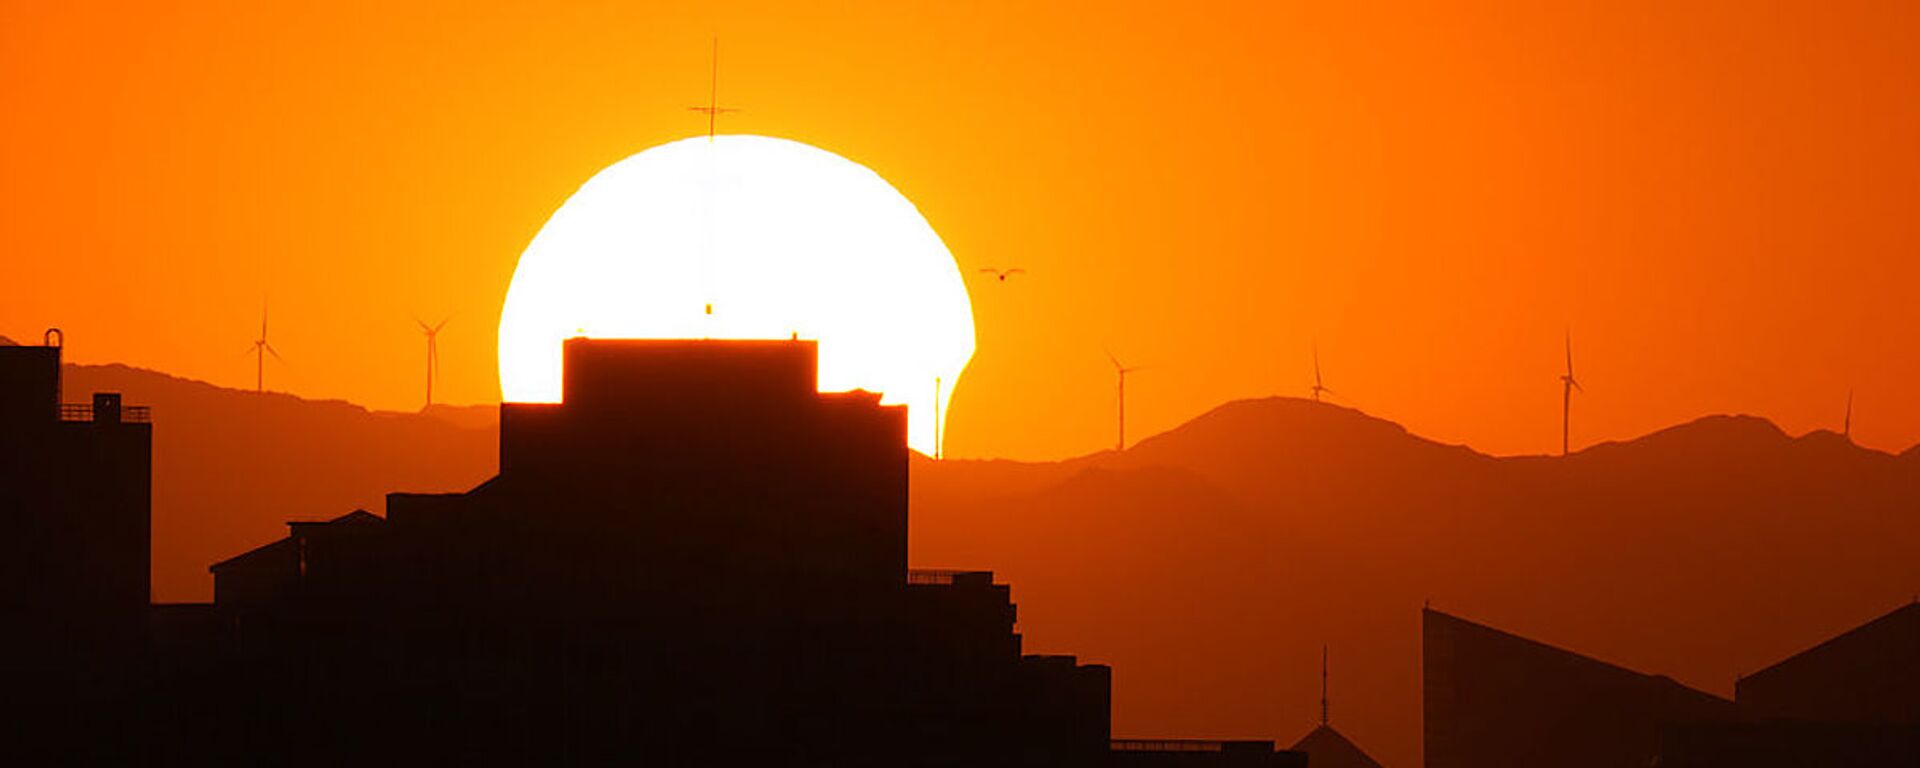 Частичное затмение солнца в Пекине - Sputnik Արմենիա, 1920, 11.06.2021